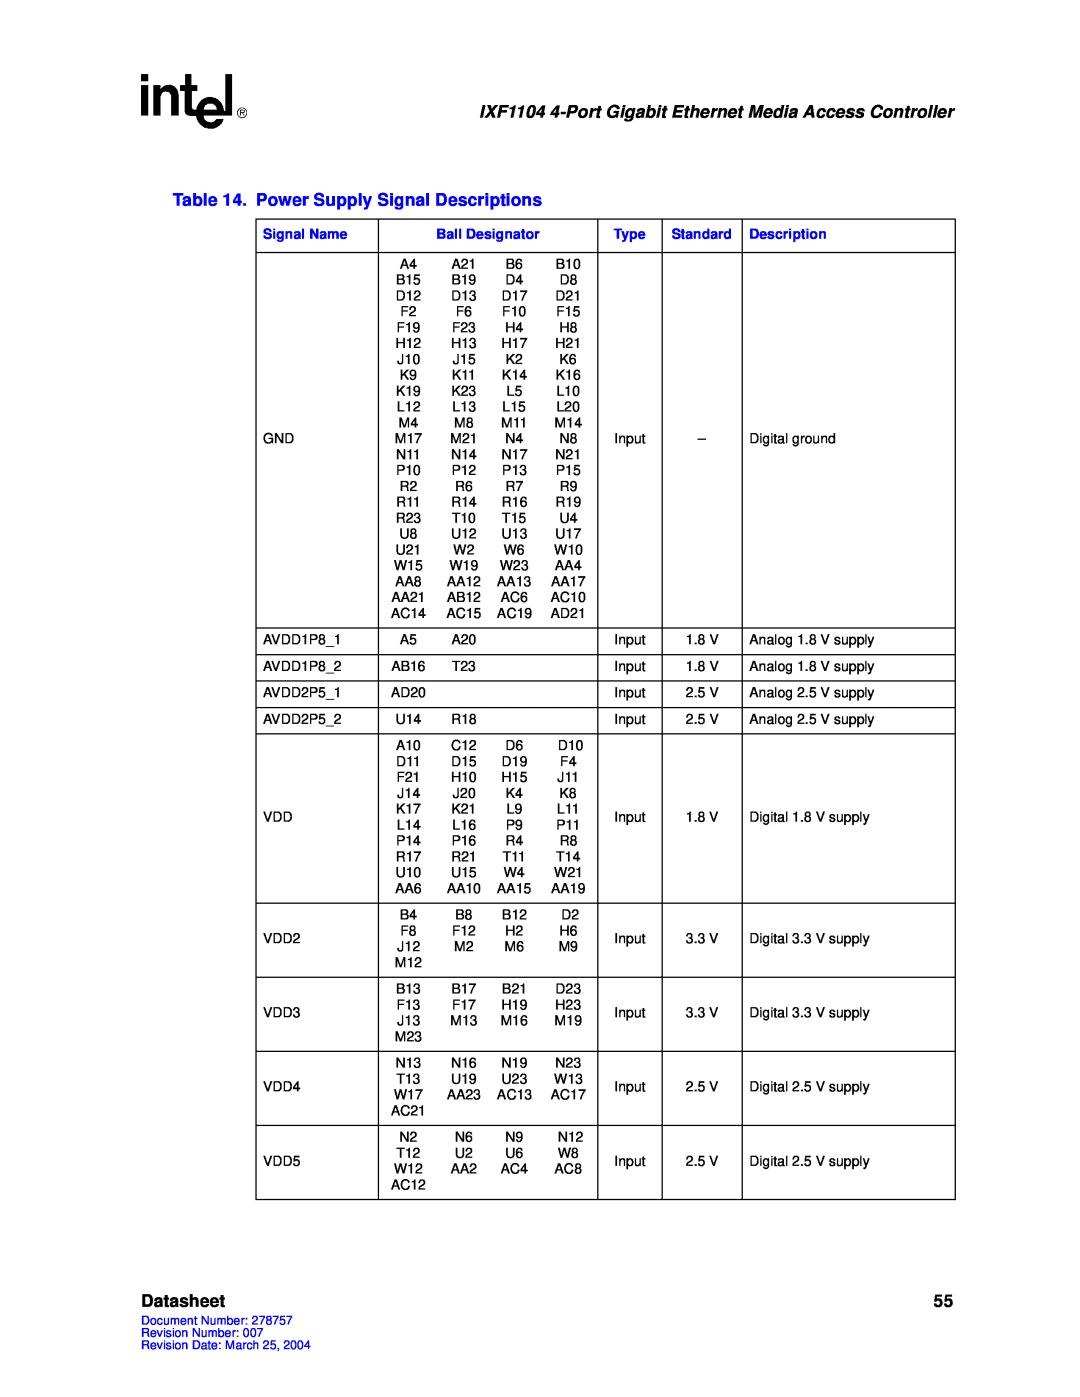 Intel IXF1104 manual Power Supply Signal Descriptions, Datasheet 